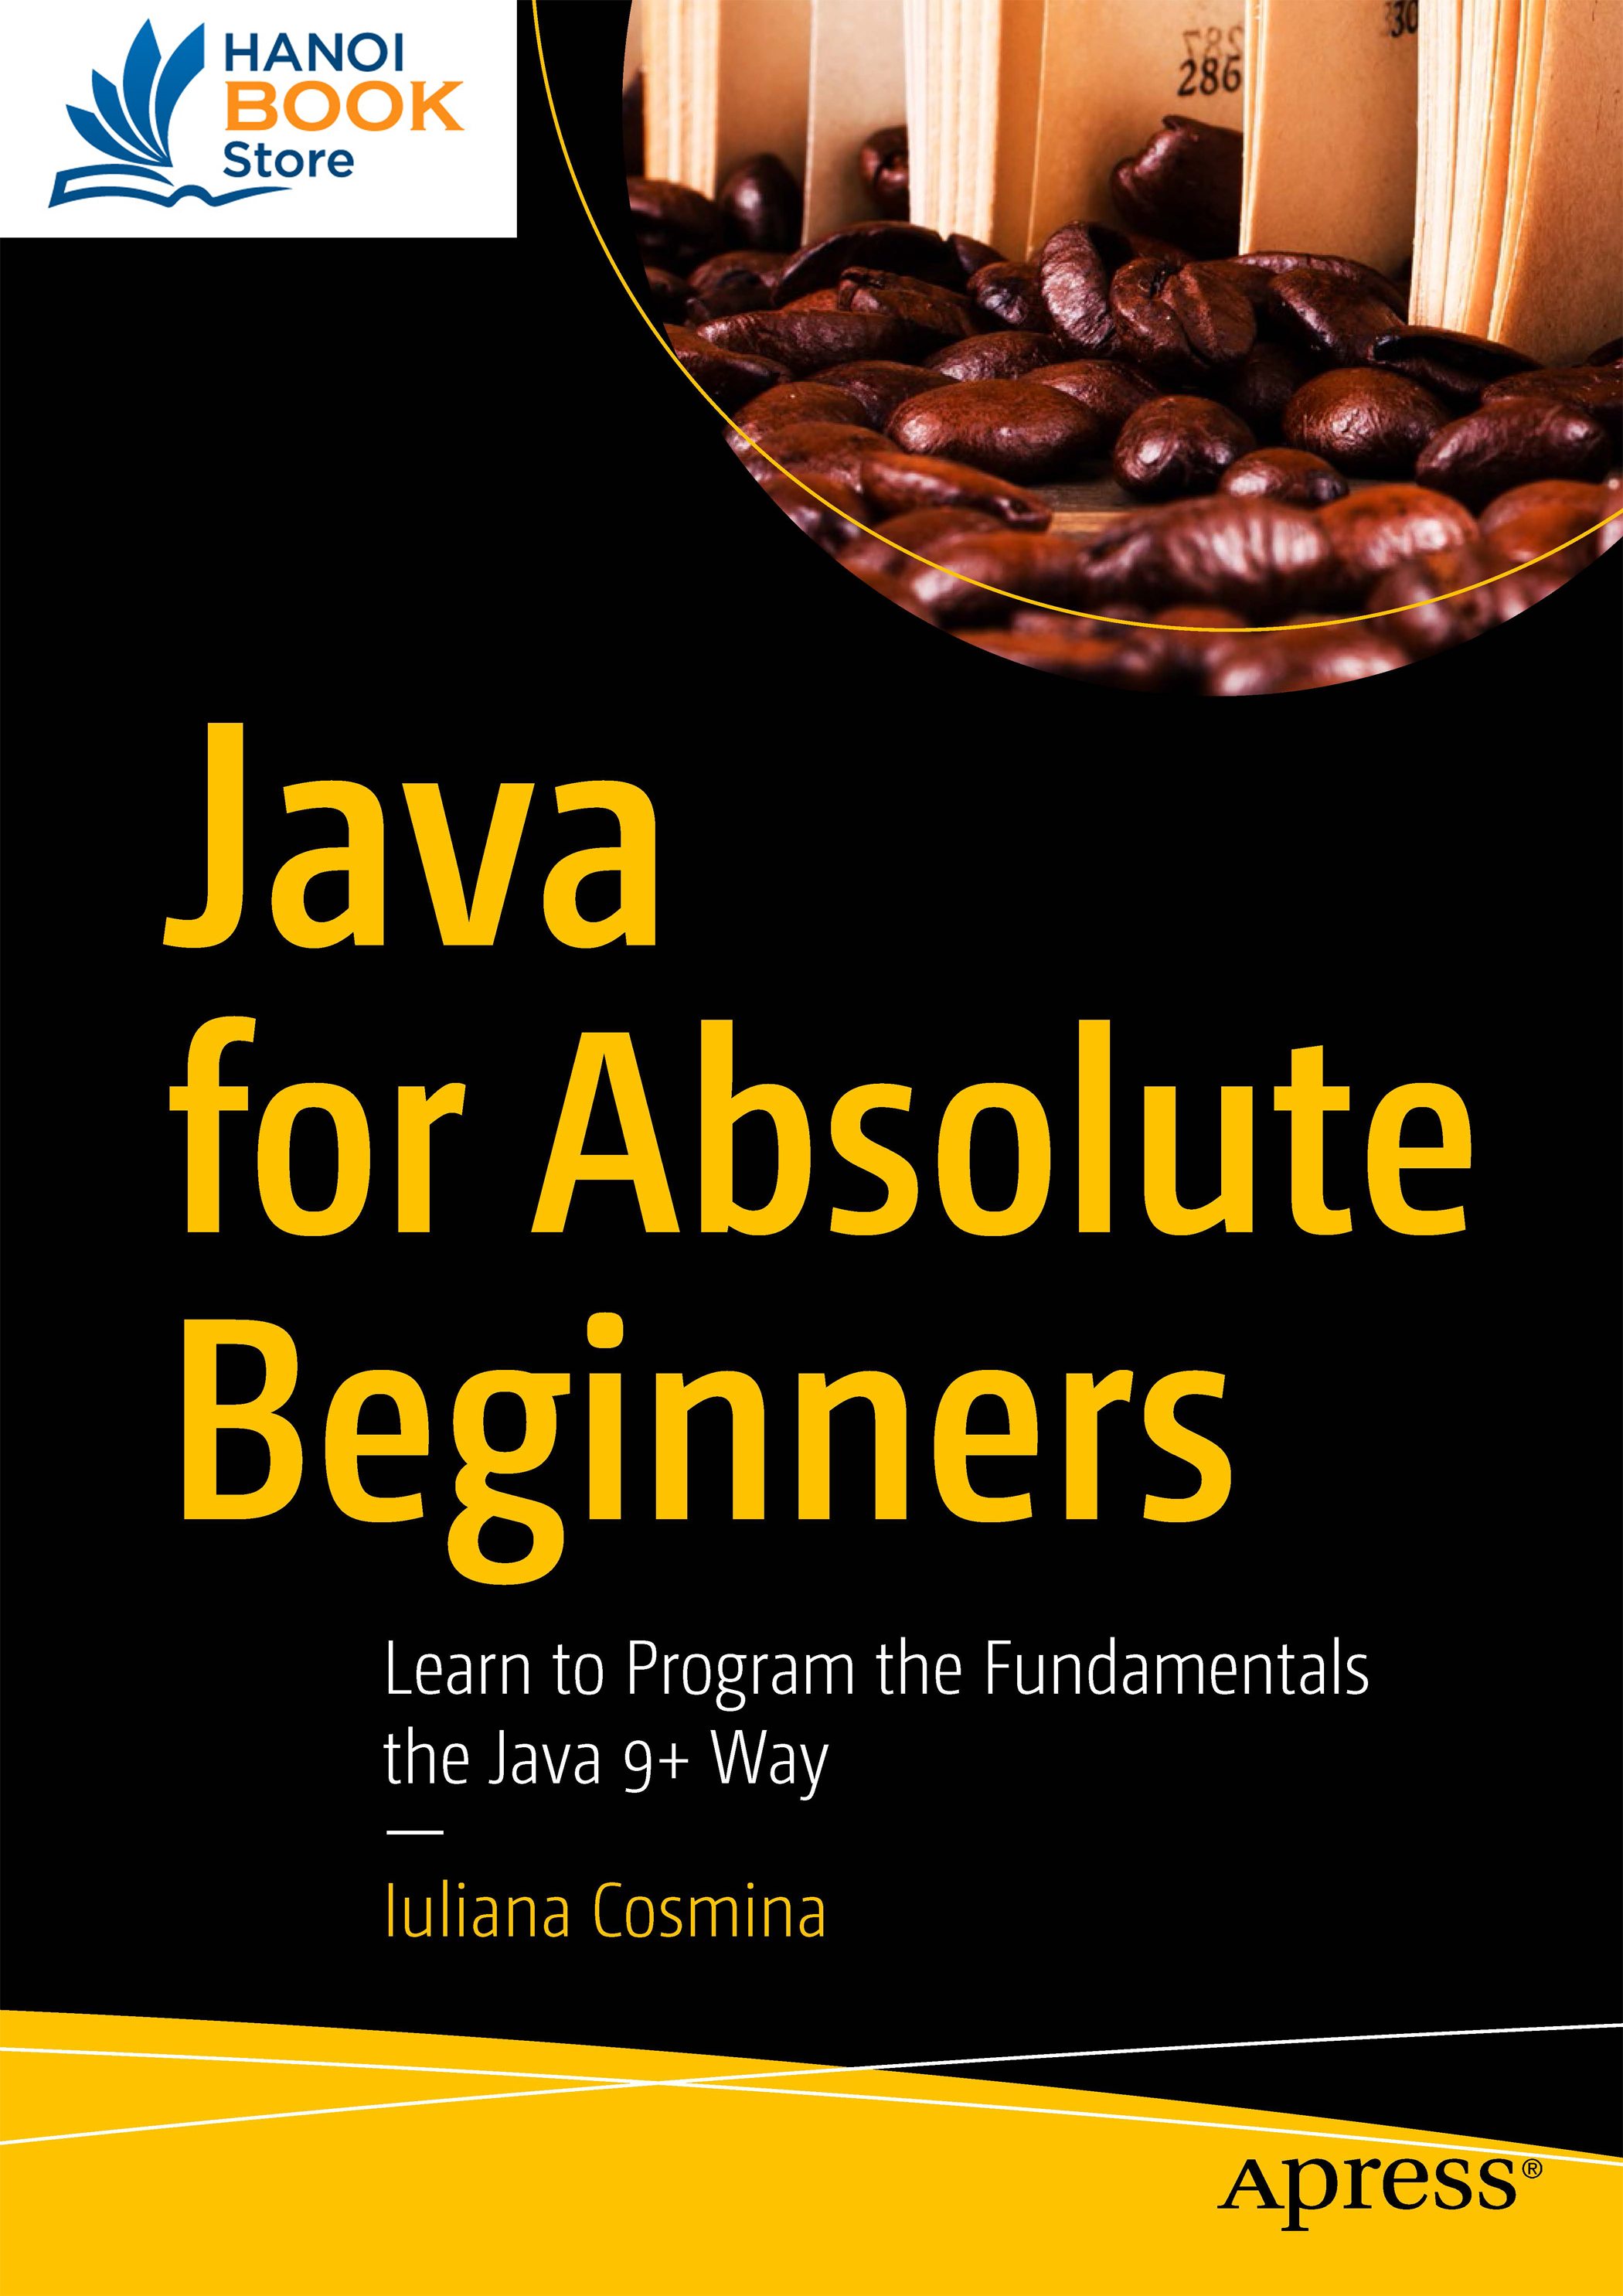 Java for Absolute Beginnersv